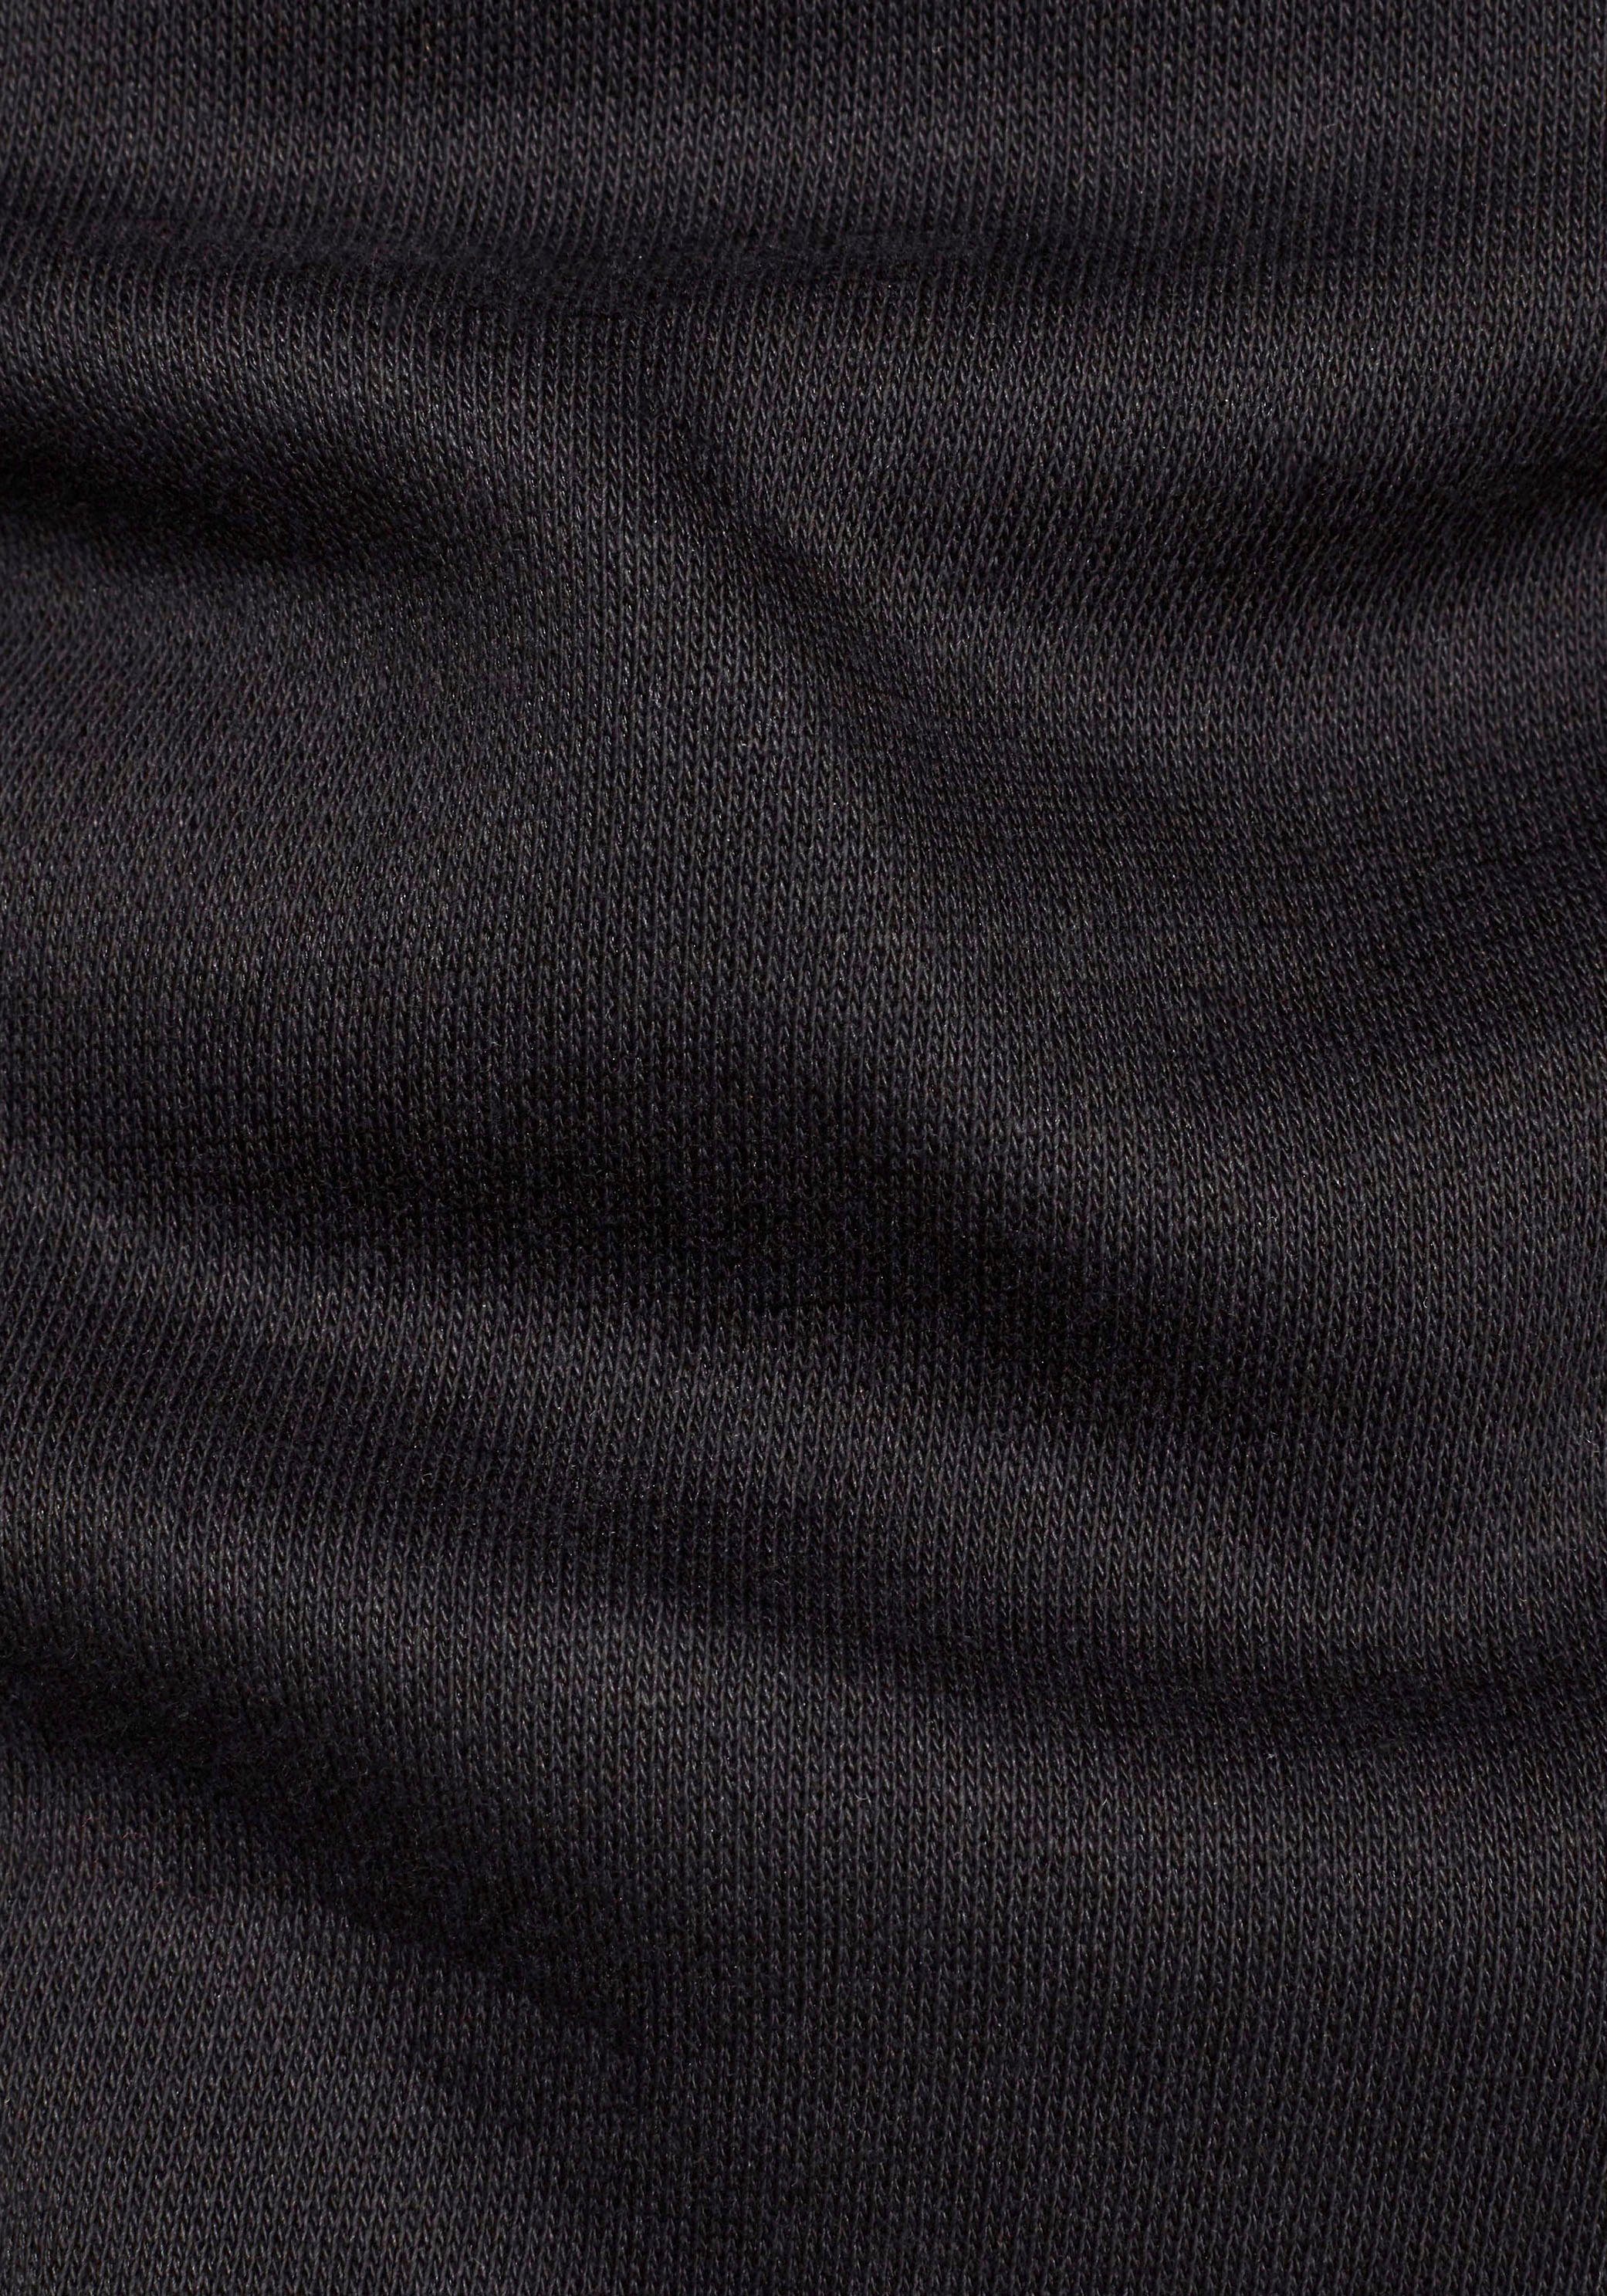 Premium Basic Kapuzensweatjacke G-Star Hooded Sweater dk. black RAW Zip